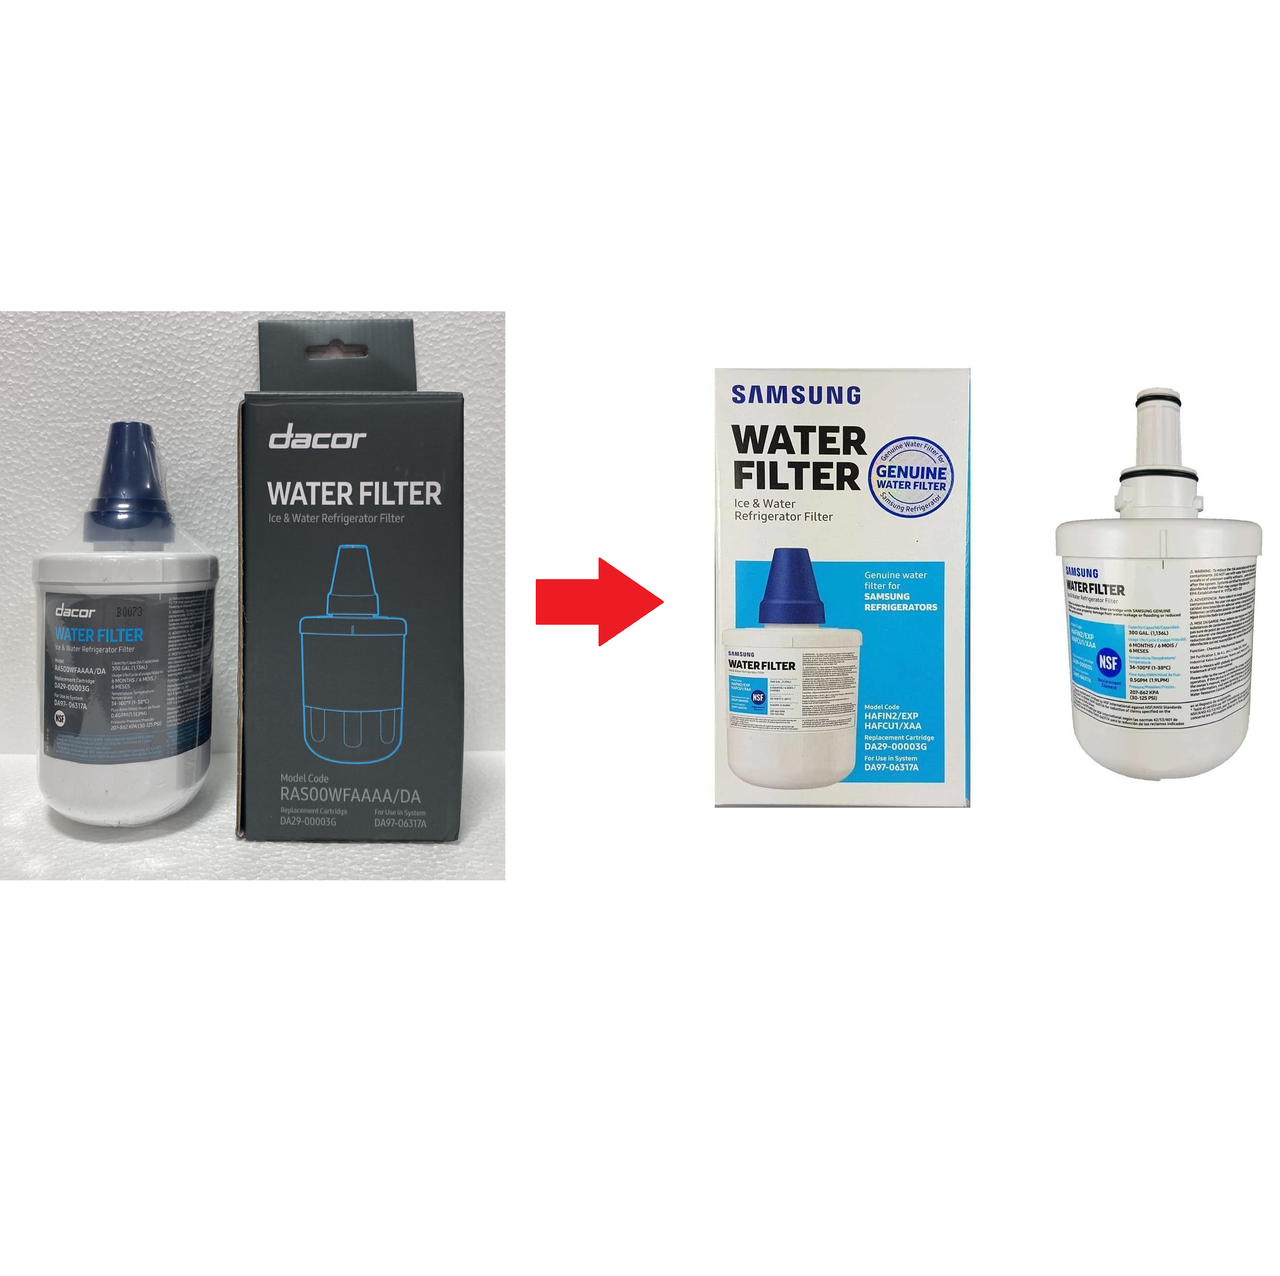 Dacor RAS00WFAAAA/DA - Water, Filter - Manufactured by Samsung